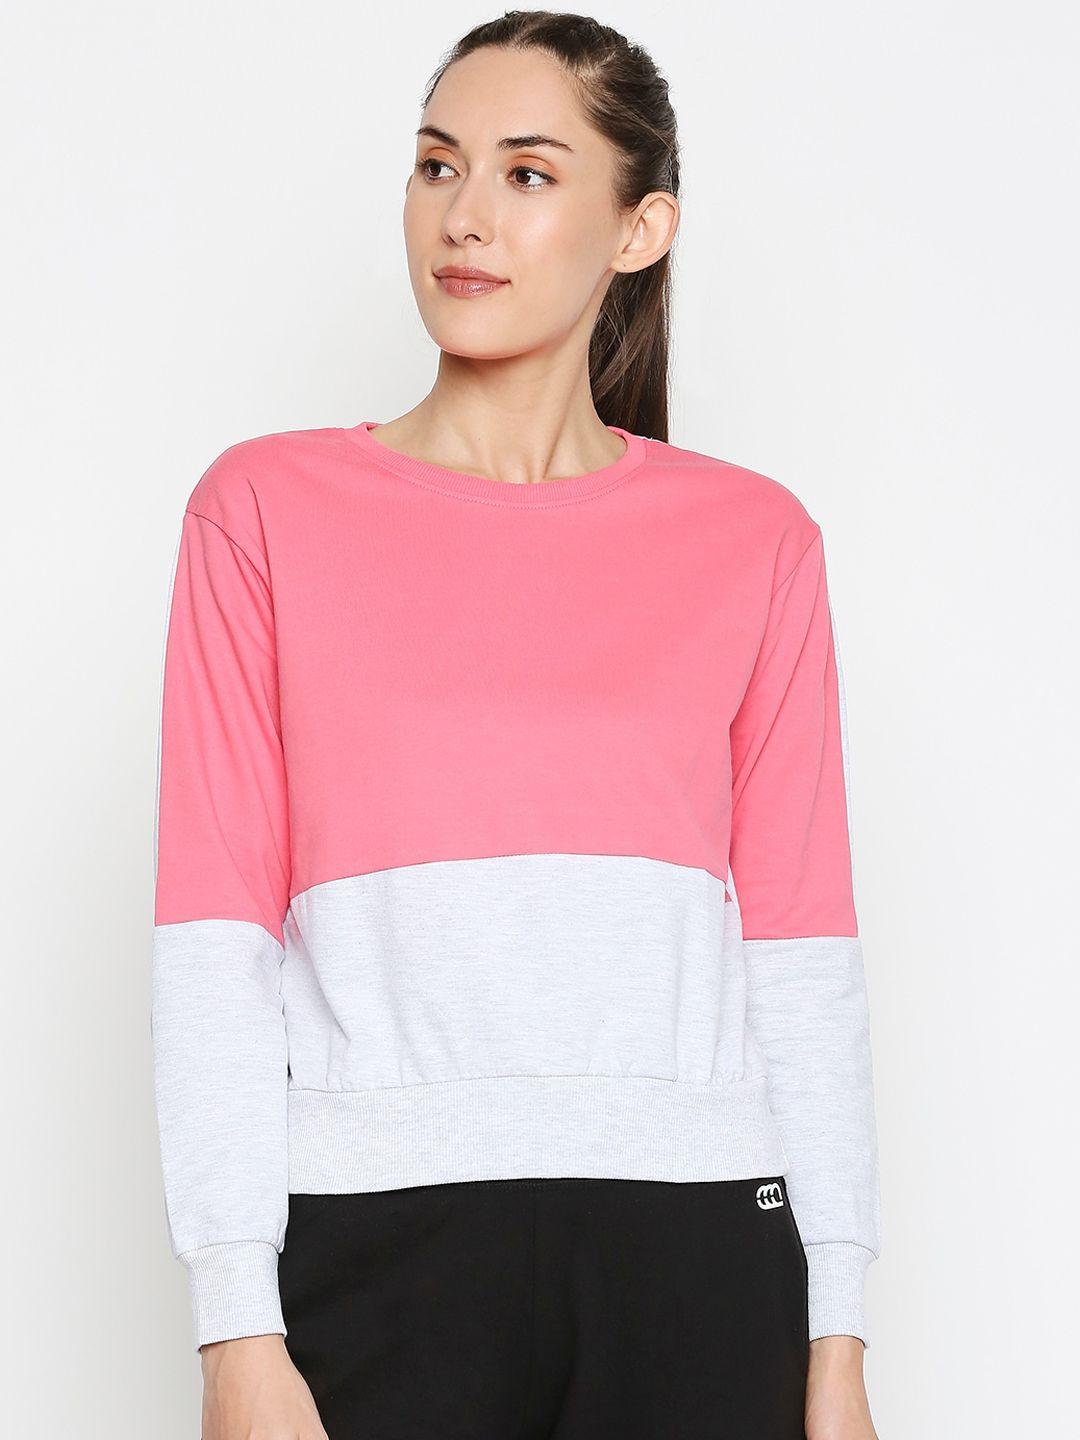 ajile by pantaloons women pink & white colourblocked sweatshirt